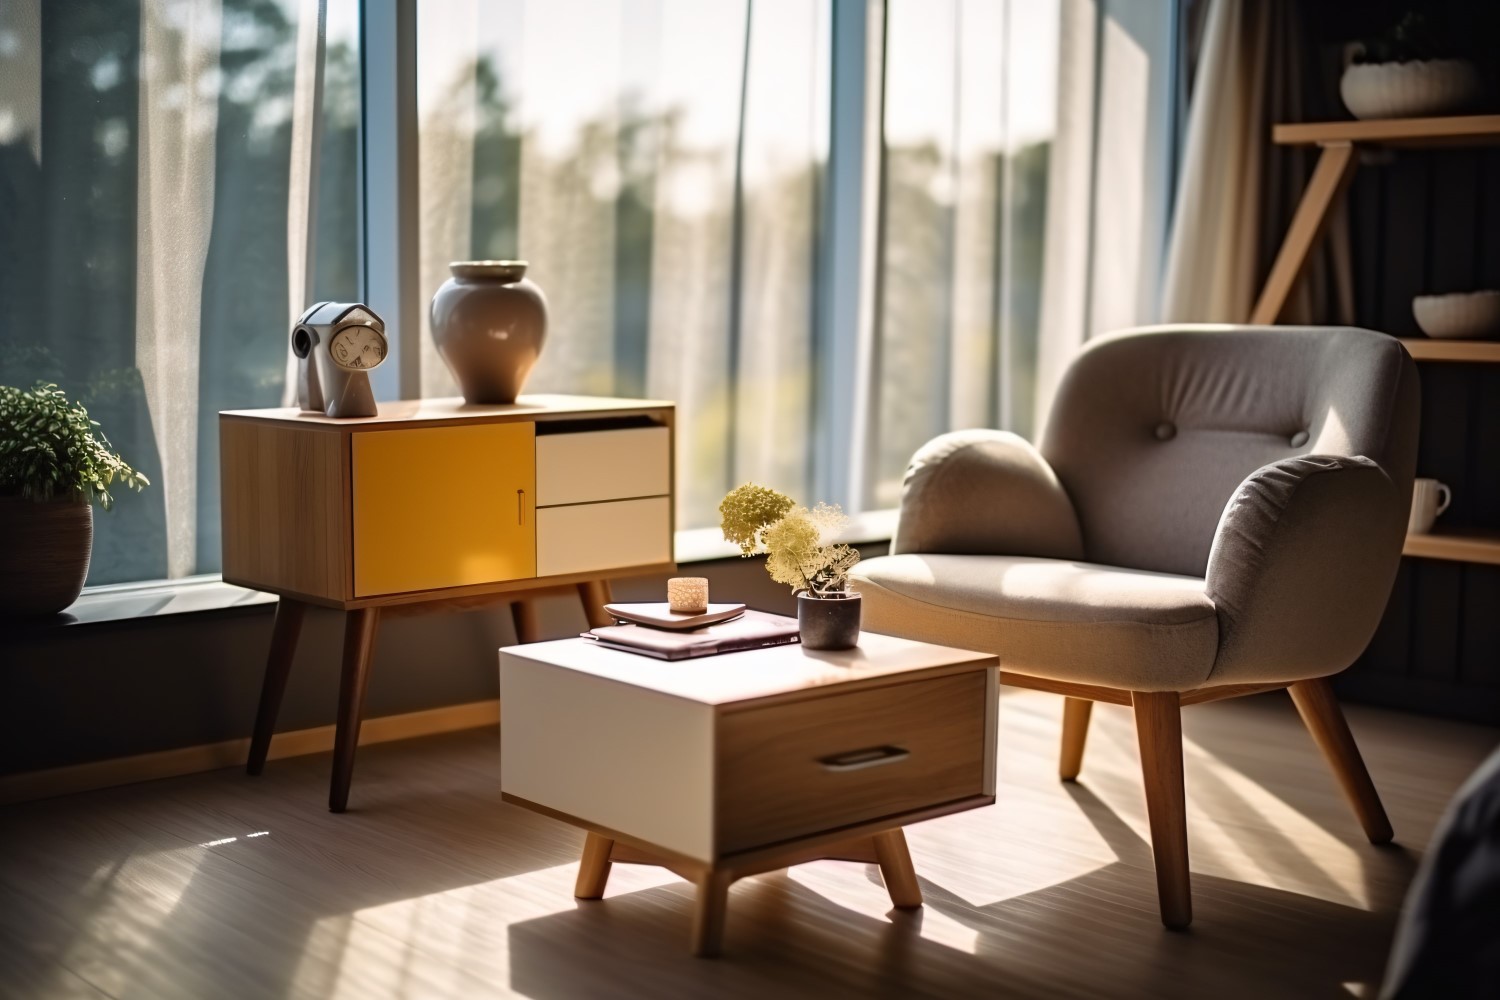 The Art of Italian Living Opulent Living Room Designs 939